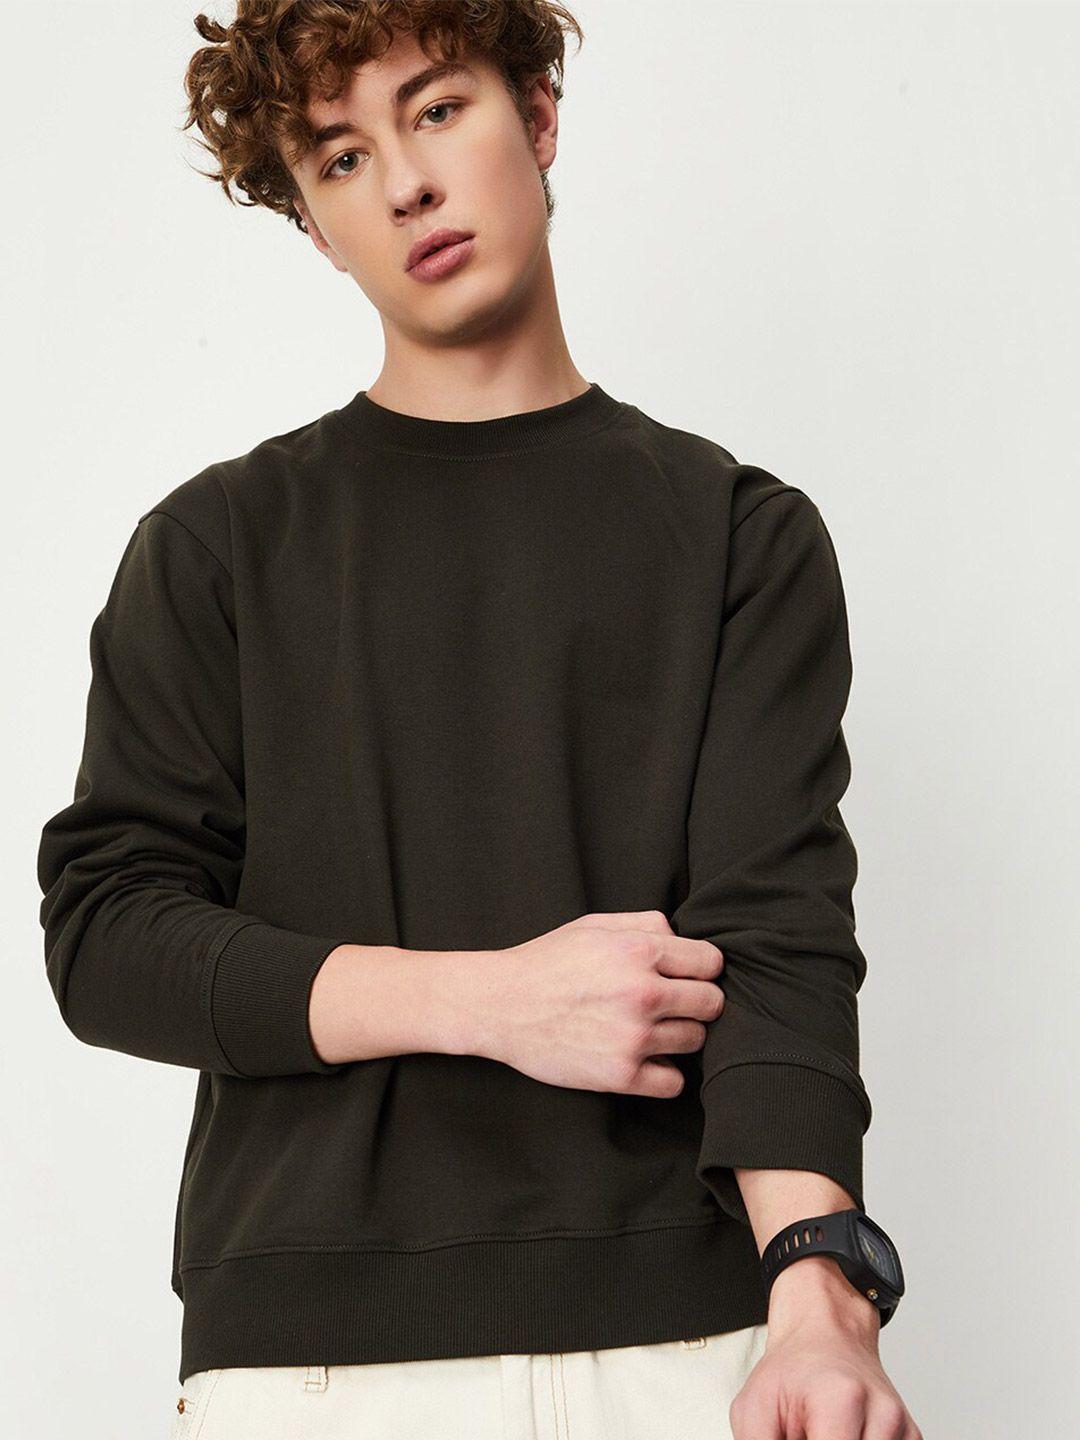 max-round-neck-long-sleeves-sweatshirt